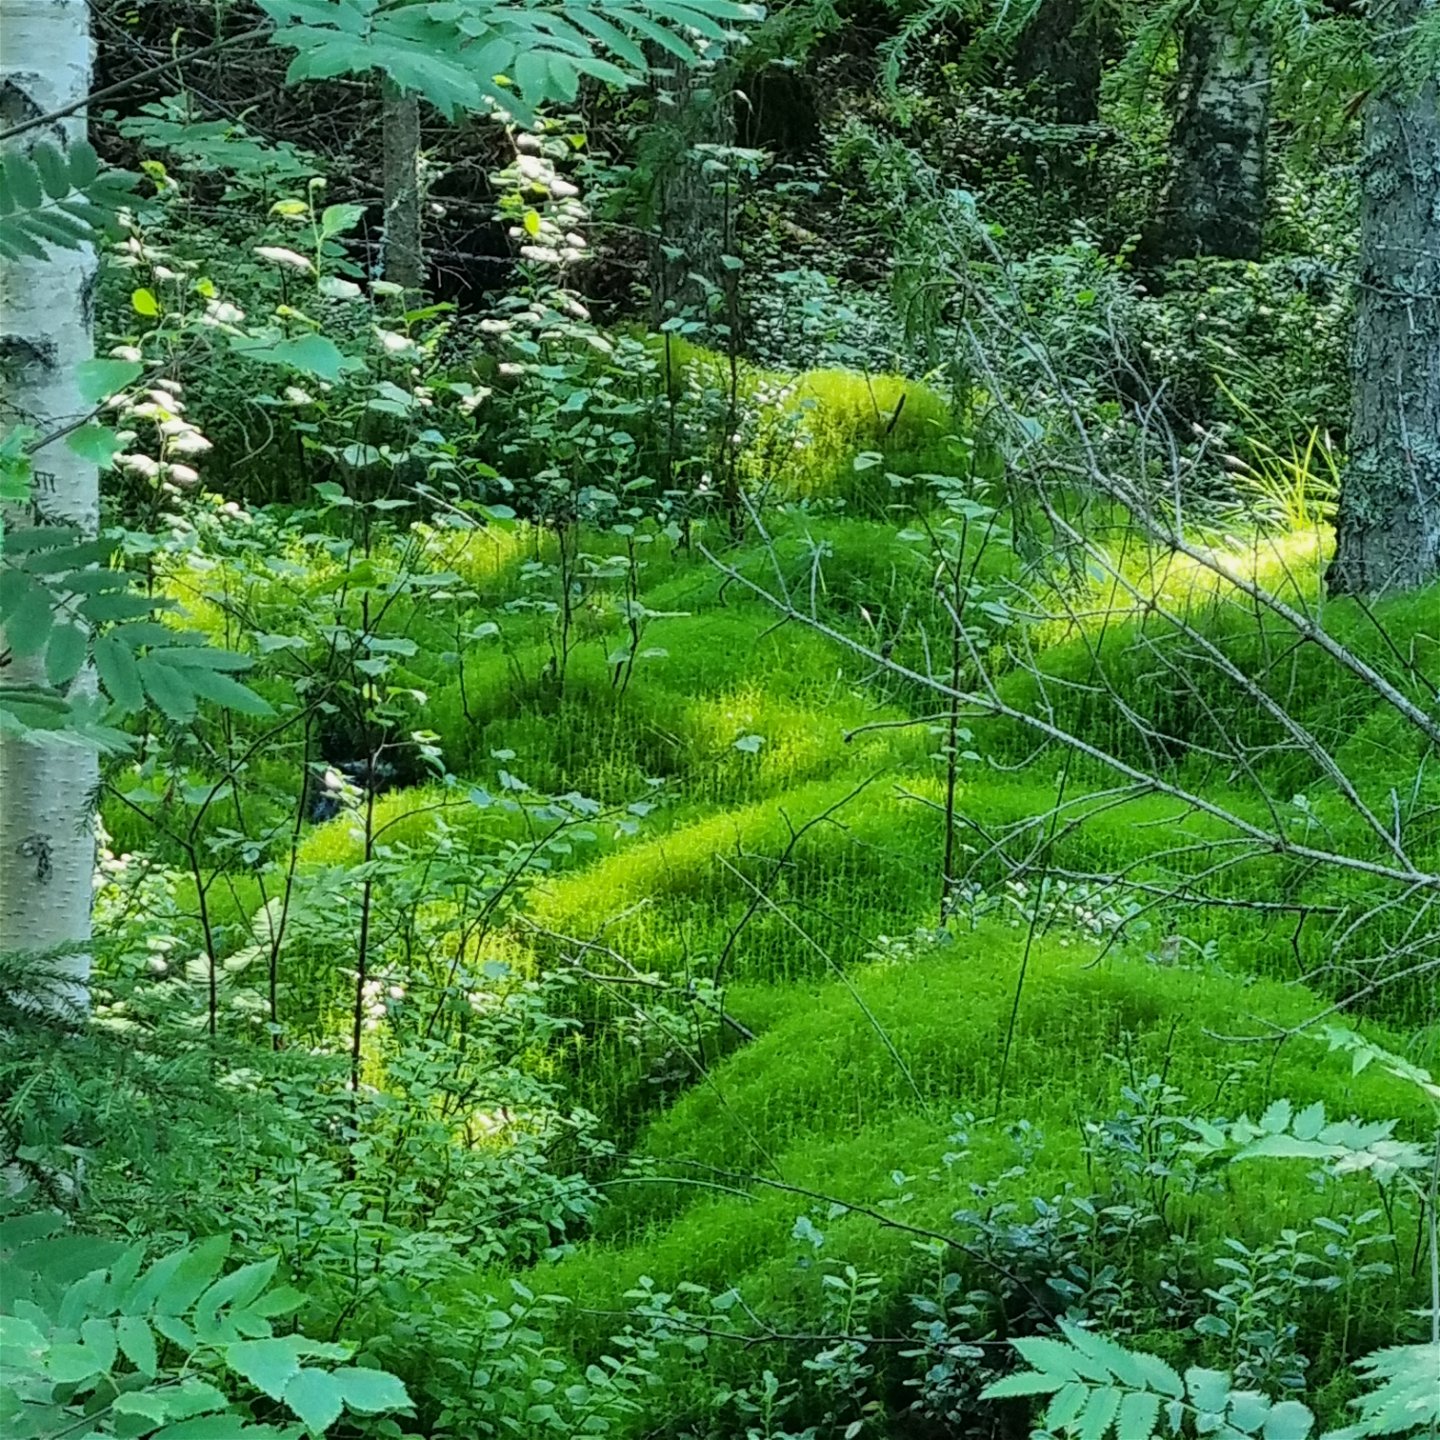 Moss covered stream